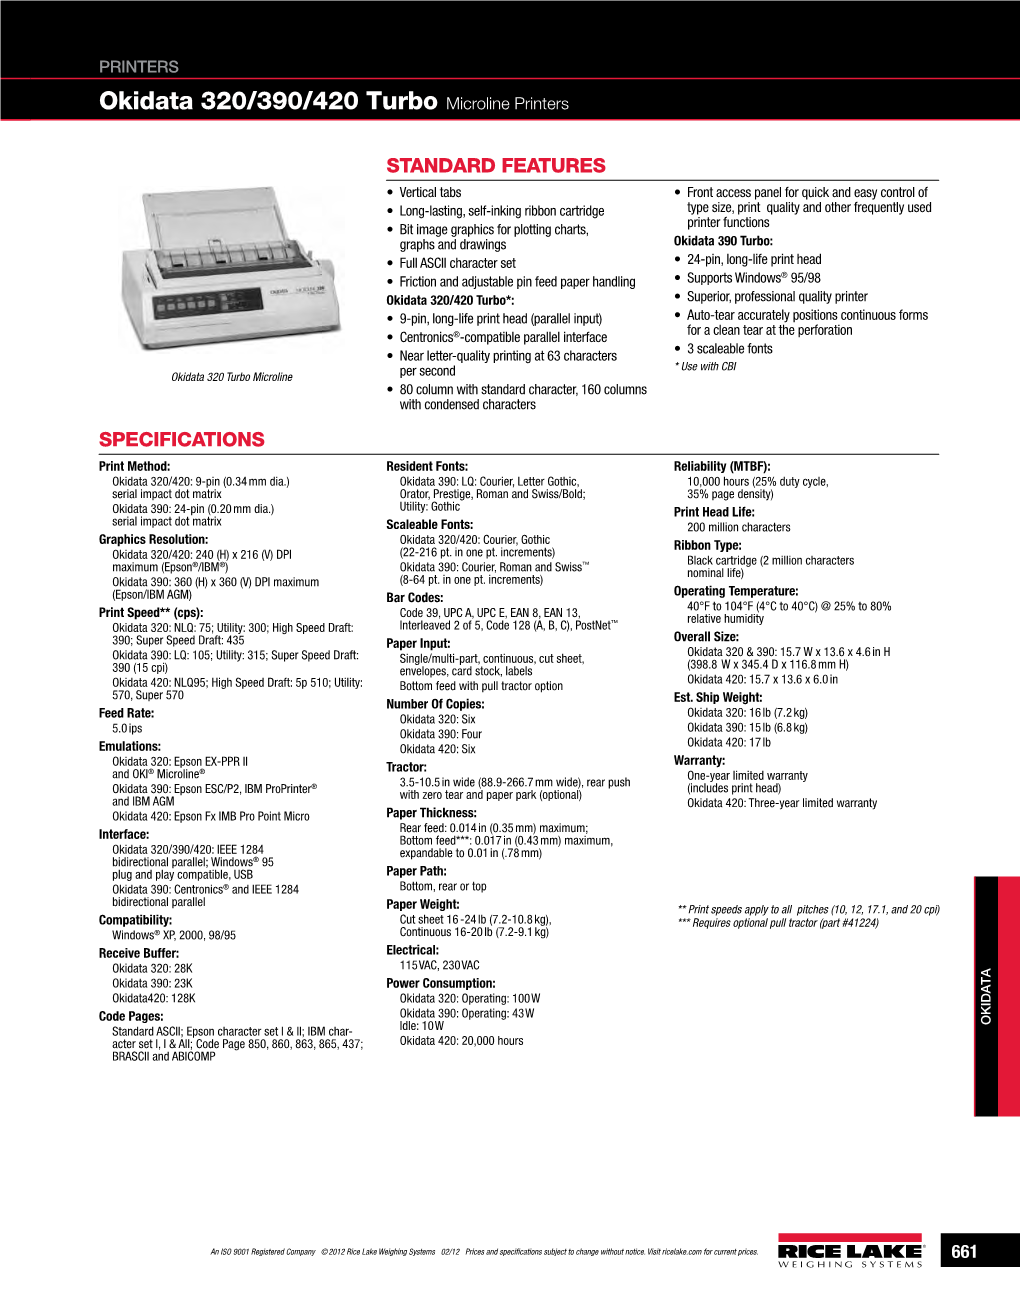 Okidata 320/390/420 Turbo Microline Printers